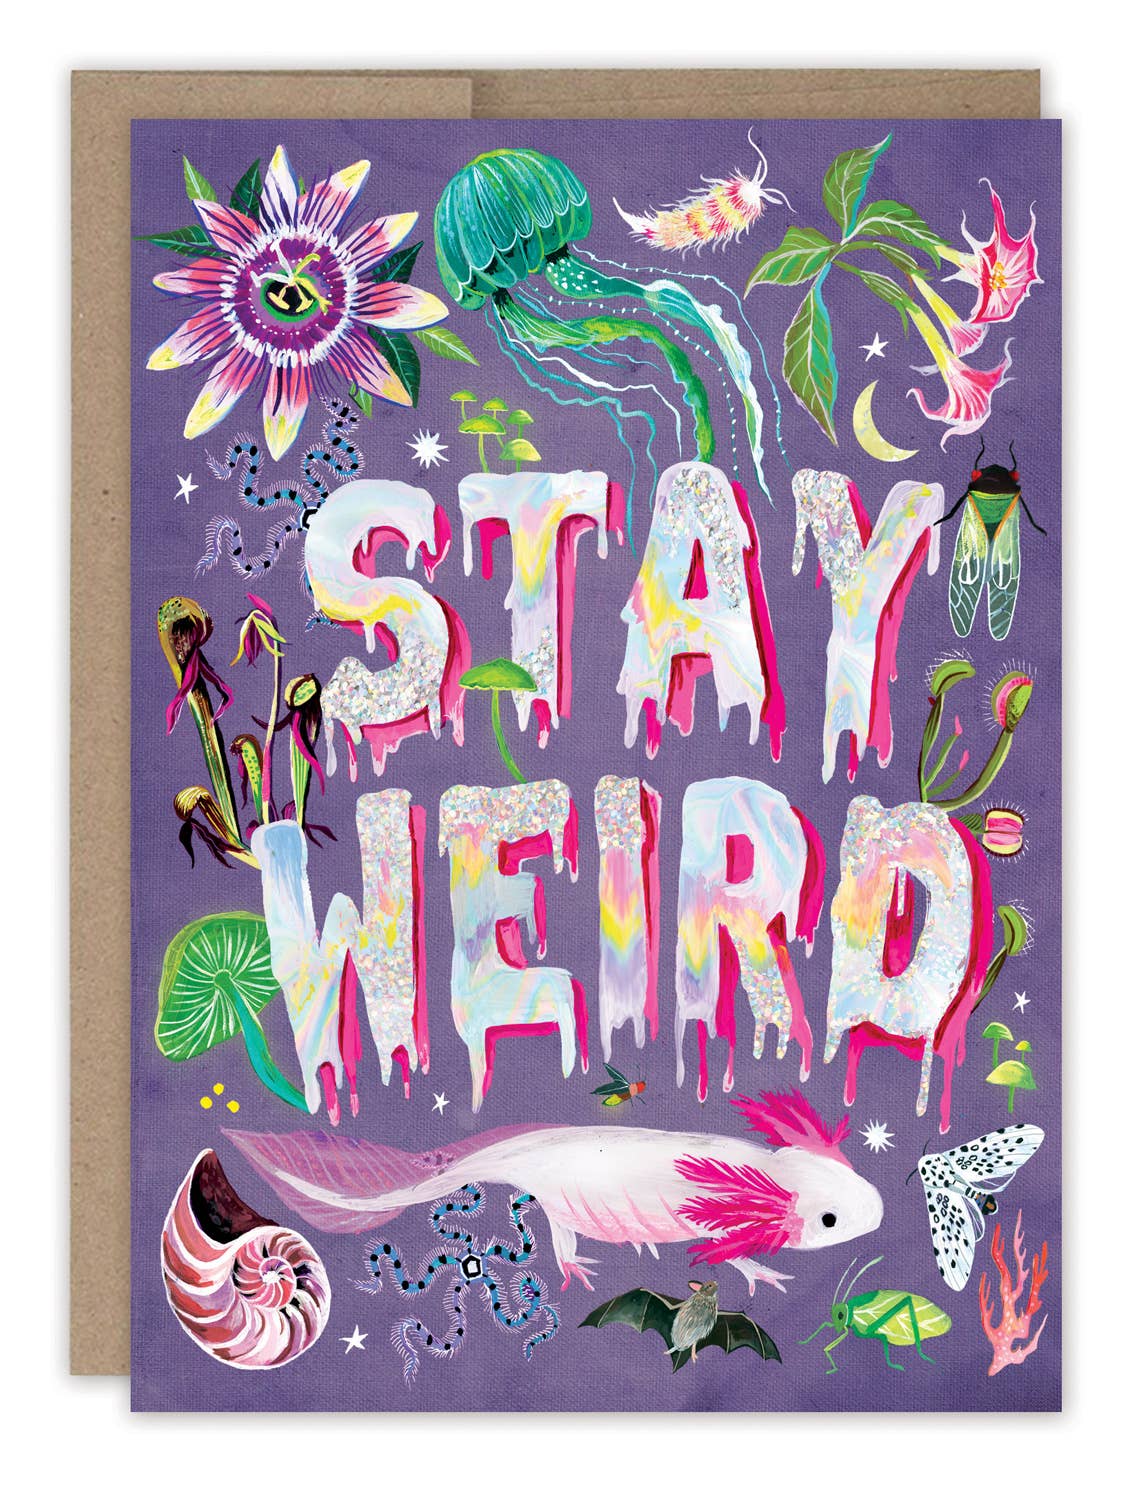 Stay Weird Birthday Card - Spiral Circle